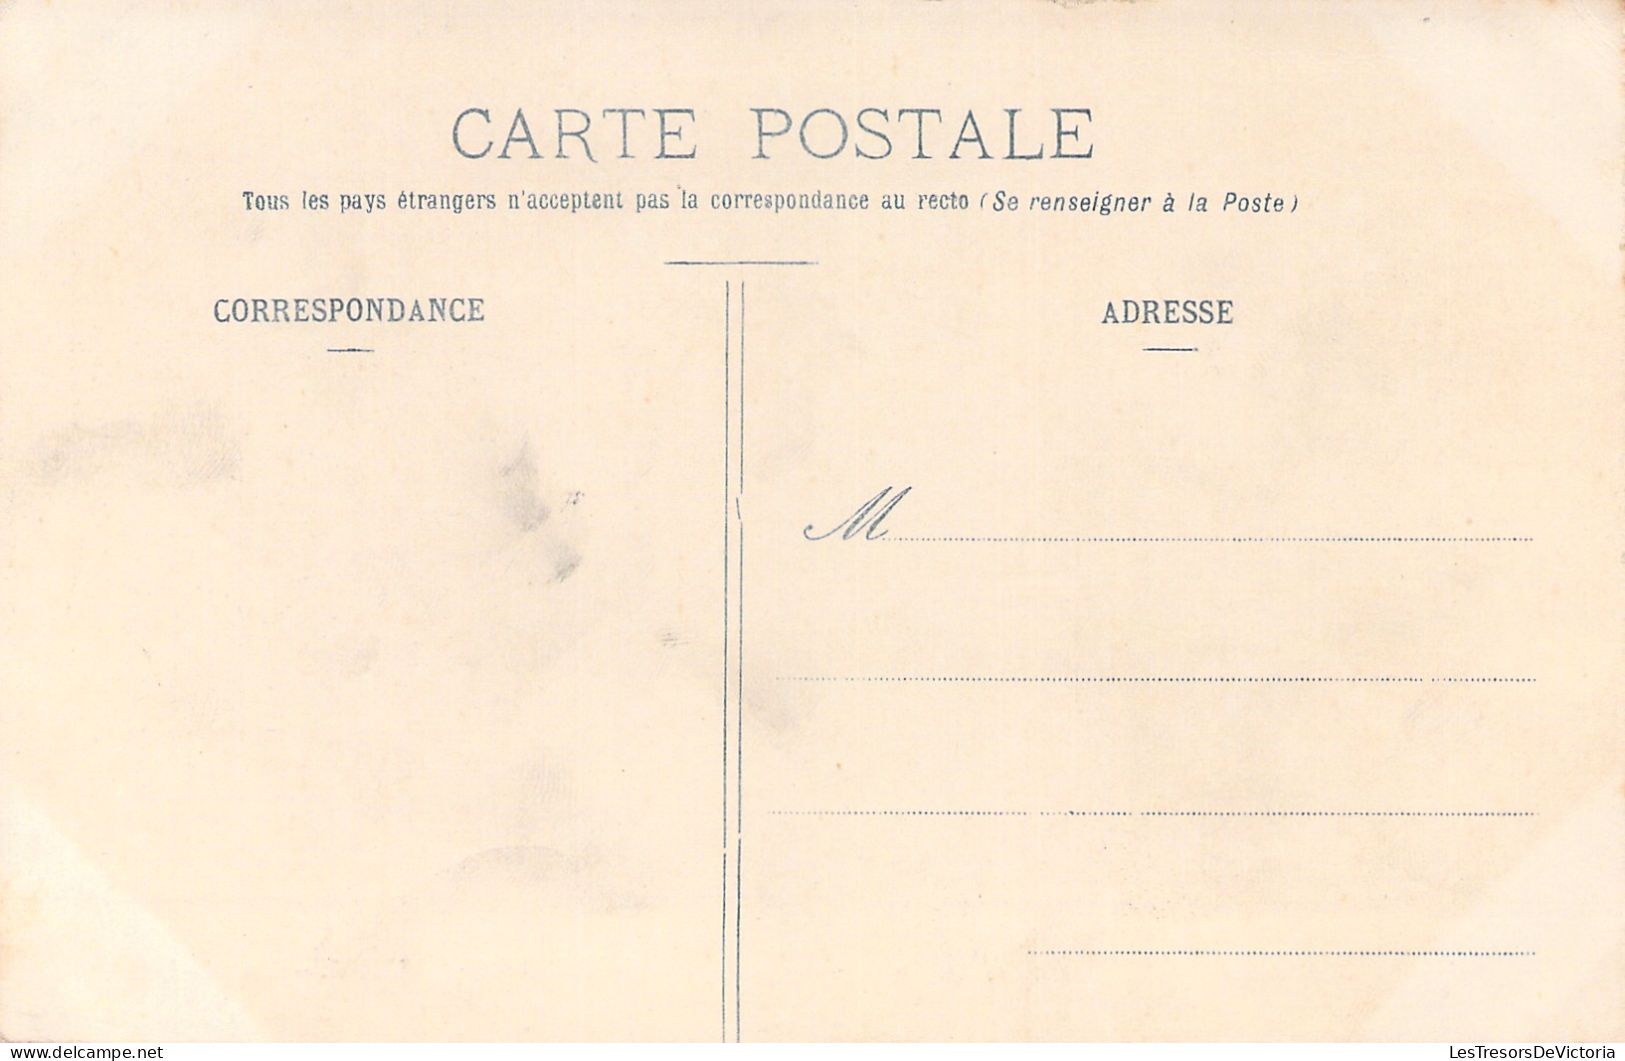 FRANCE -  Gargan Livry - La Mairie - Chevaux - Défilé - Carte Postale Ancienne - Livry Gargan